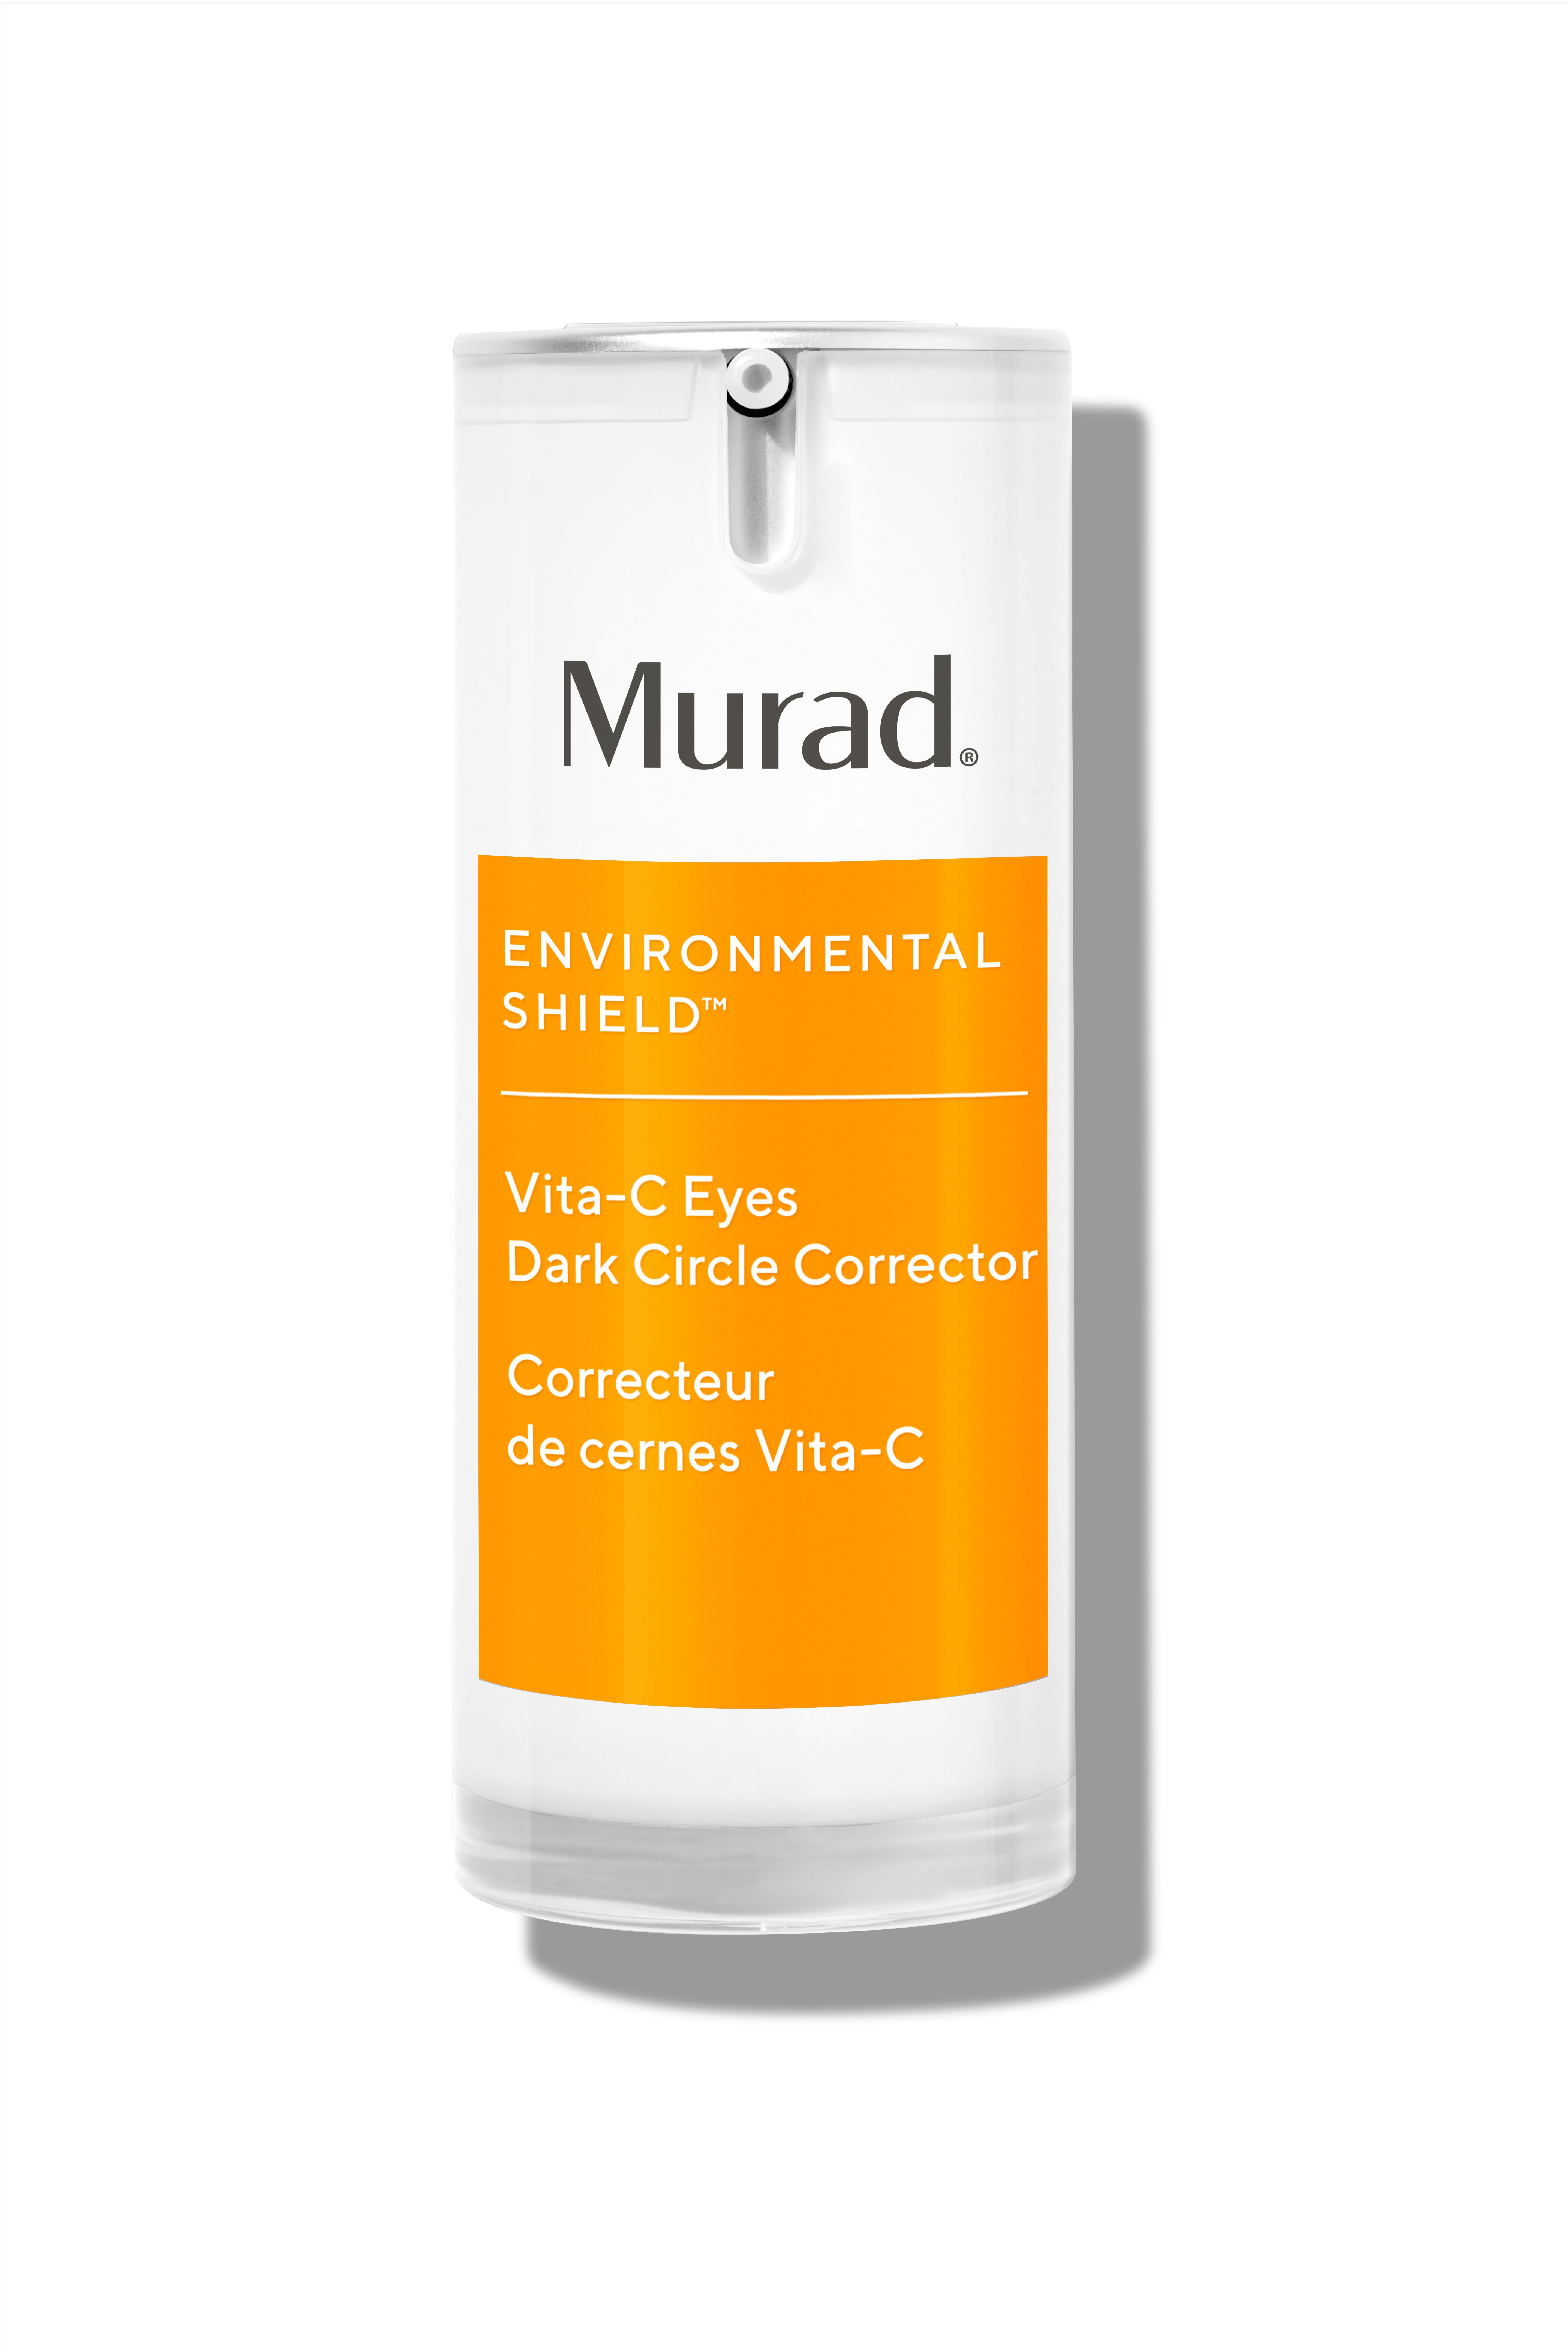 Billede af Murad Environmental Shield Vita-C Eyes Dark Circle Corrector 15 ml. hos Well.dk